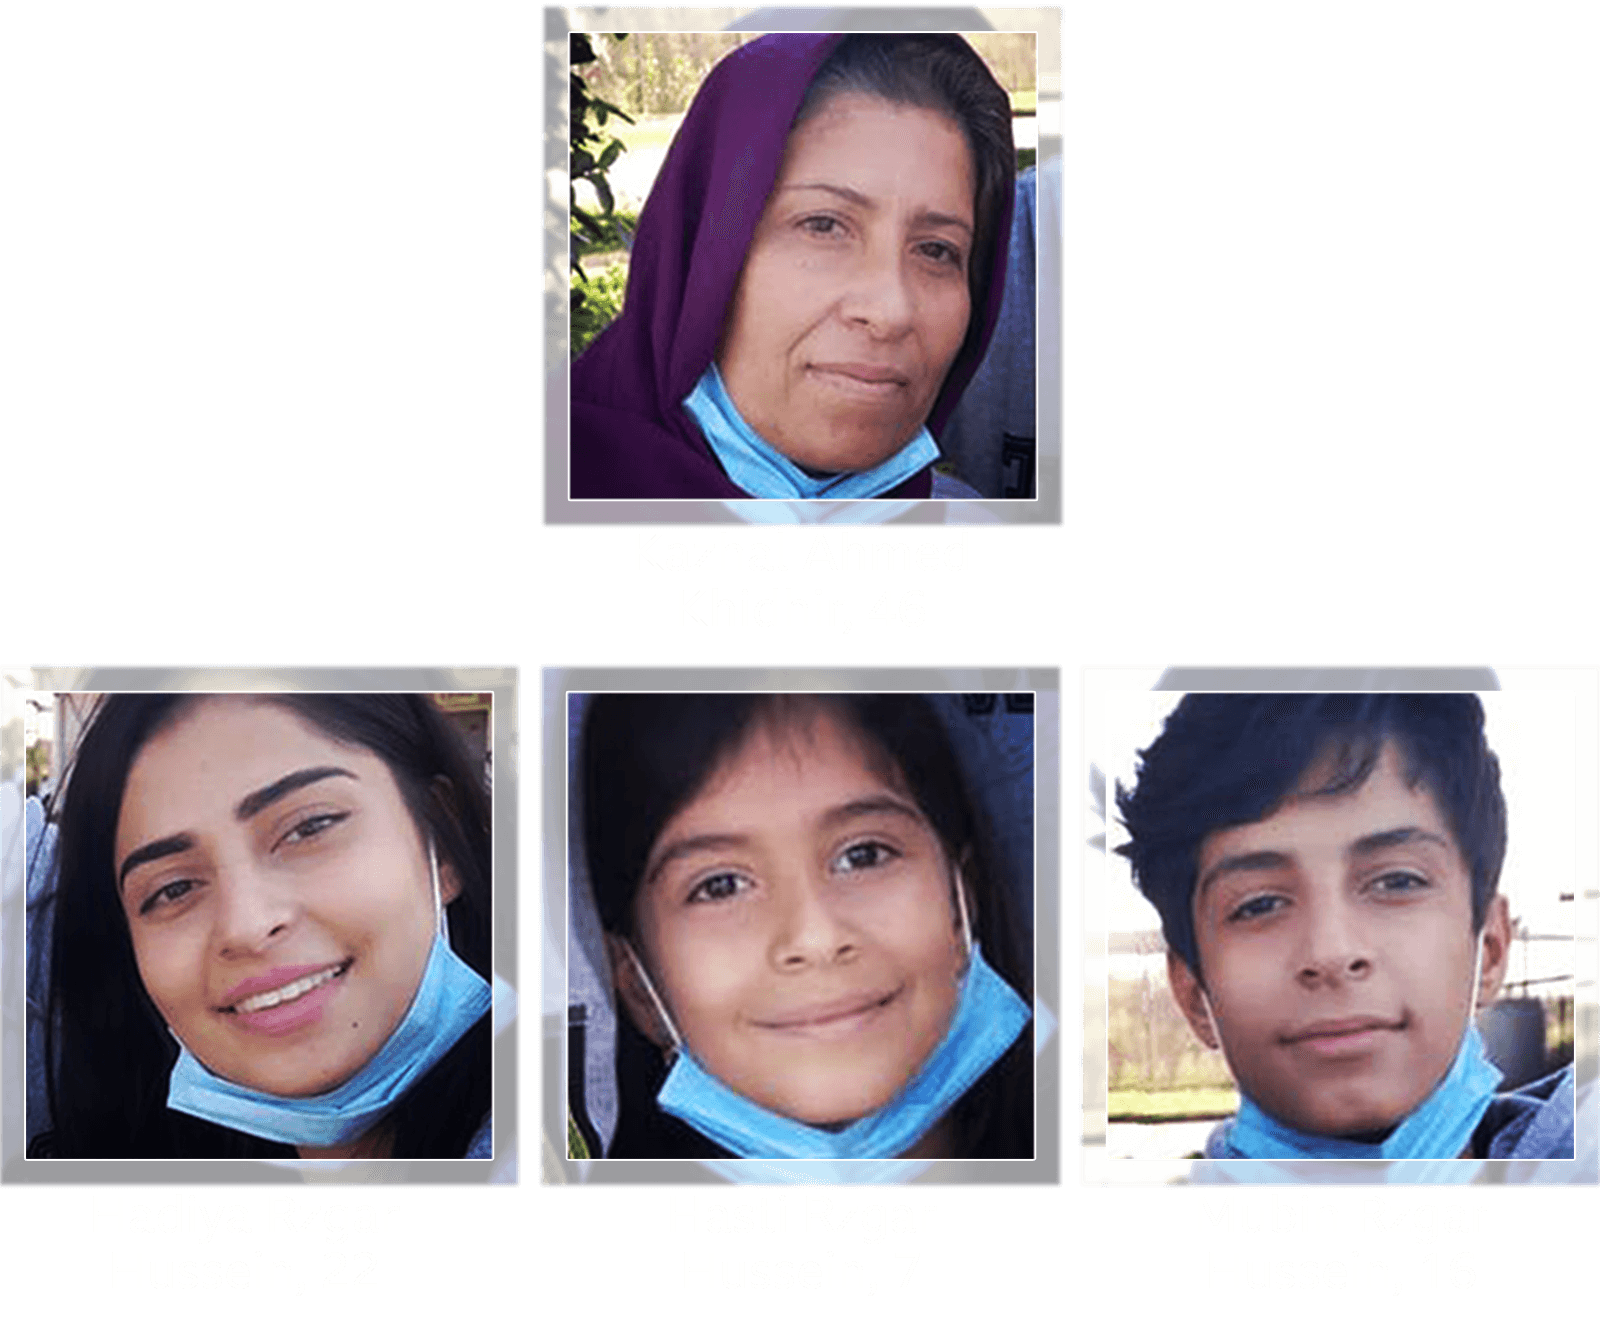 Photos showing Hadiya Rzgar Hussein, sister Hasti, brother Mubin, and mum Kazhal